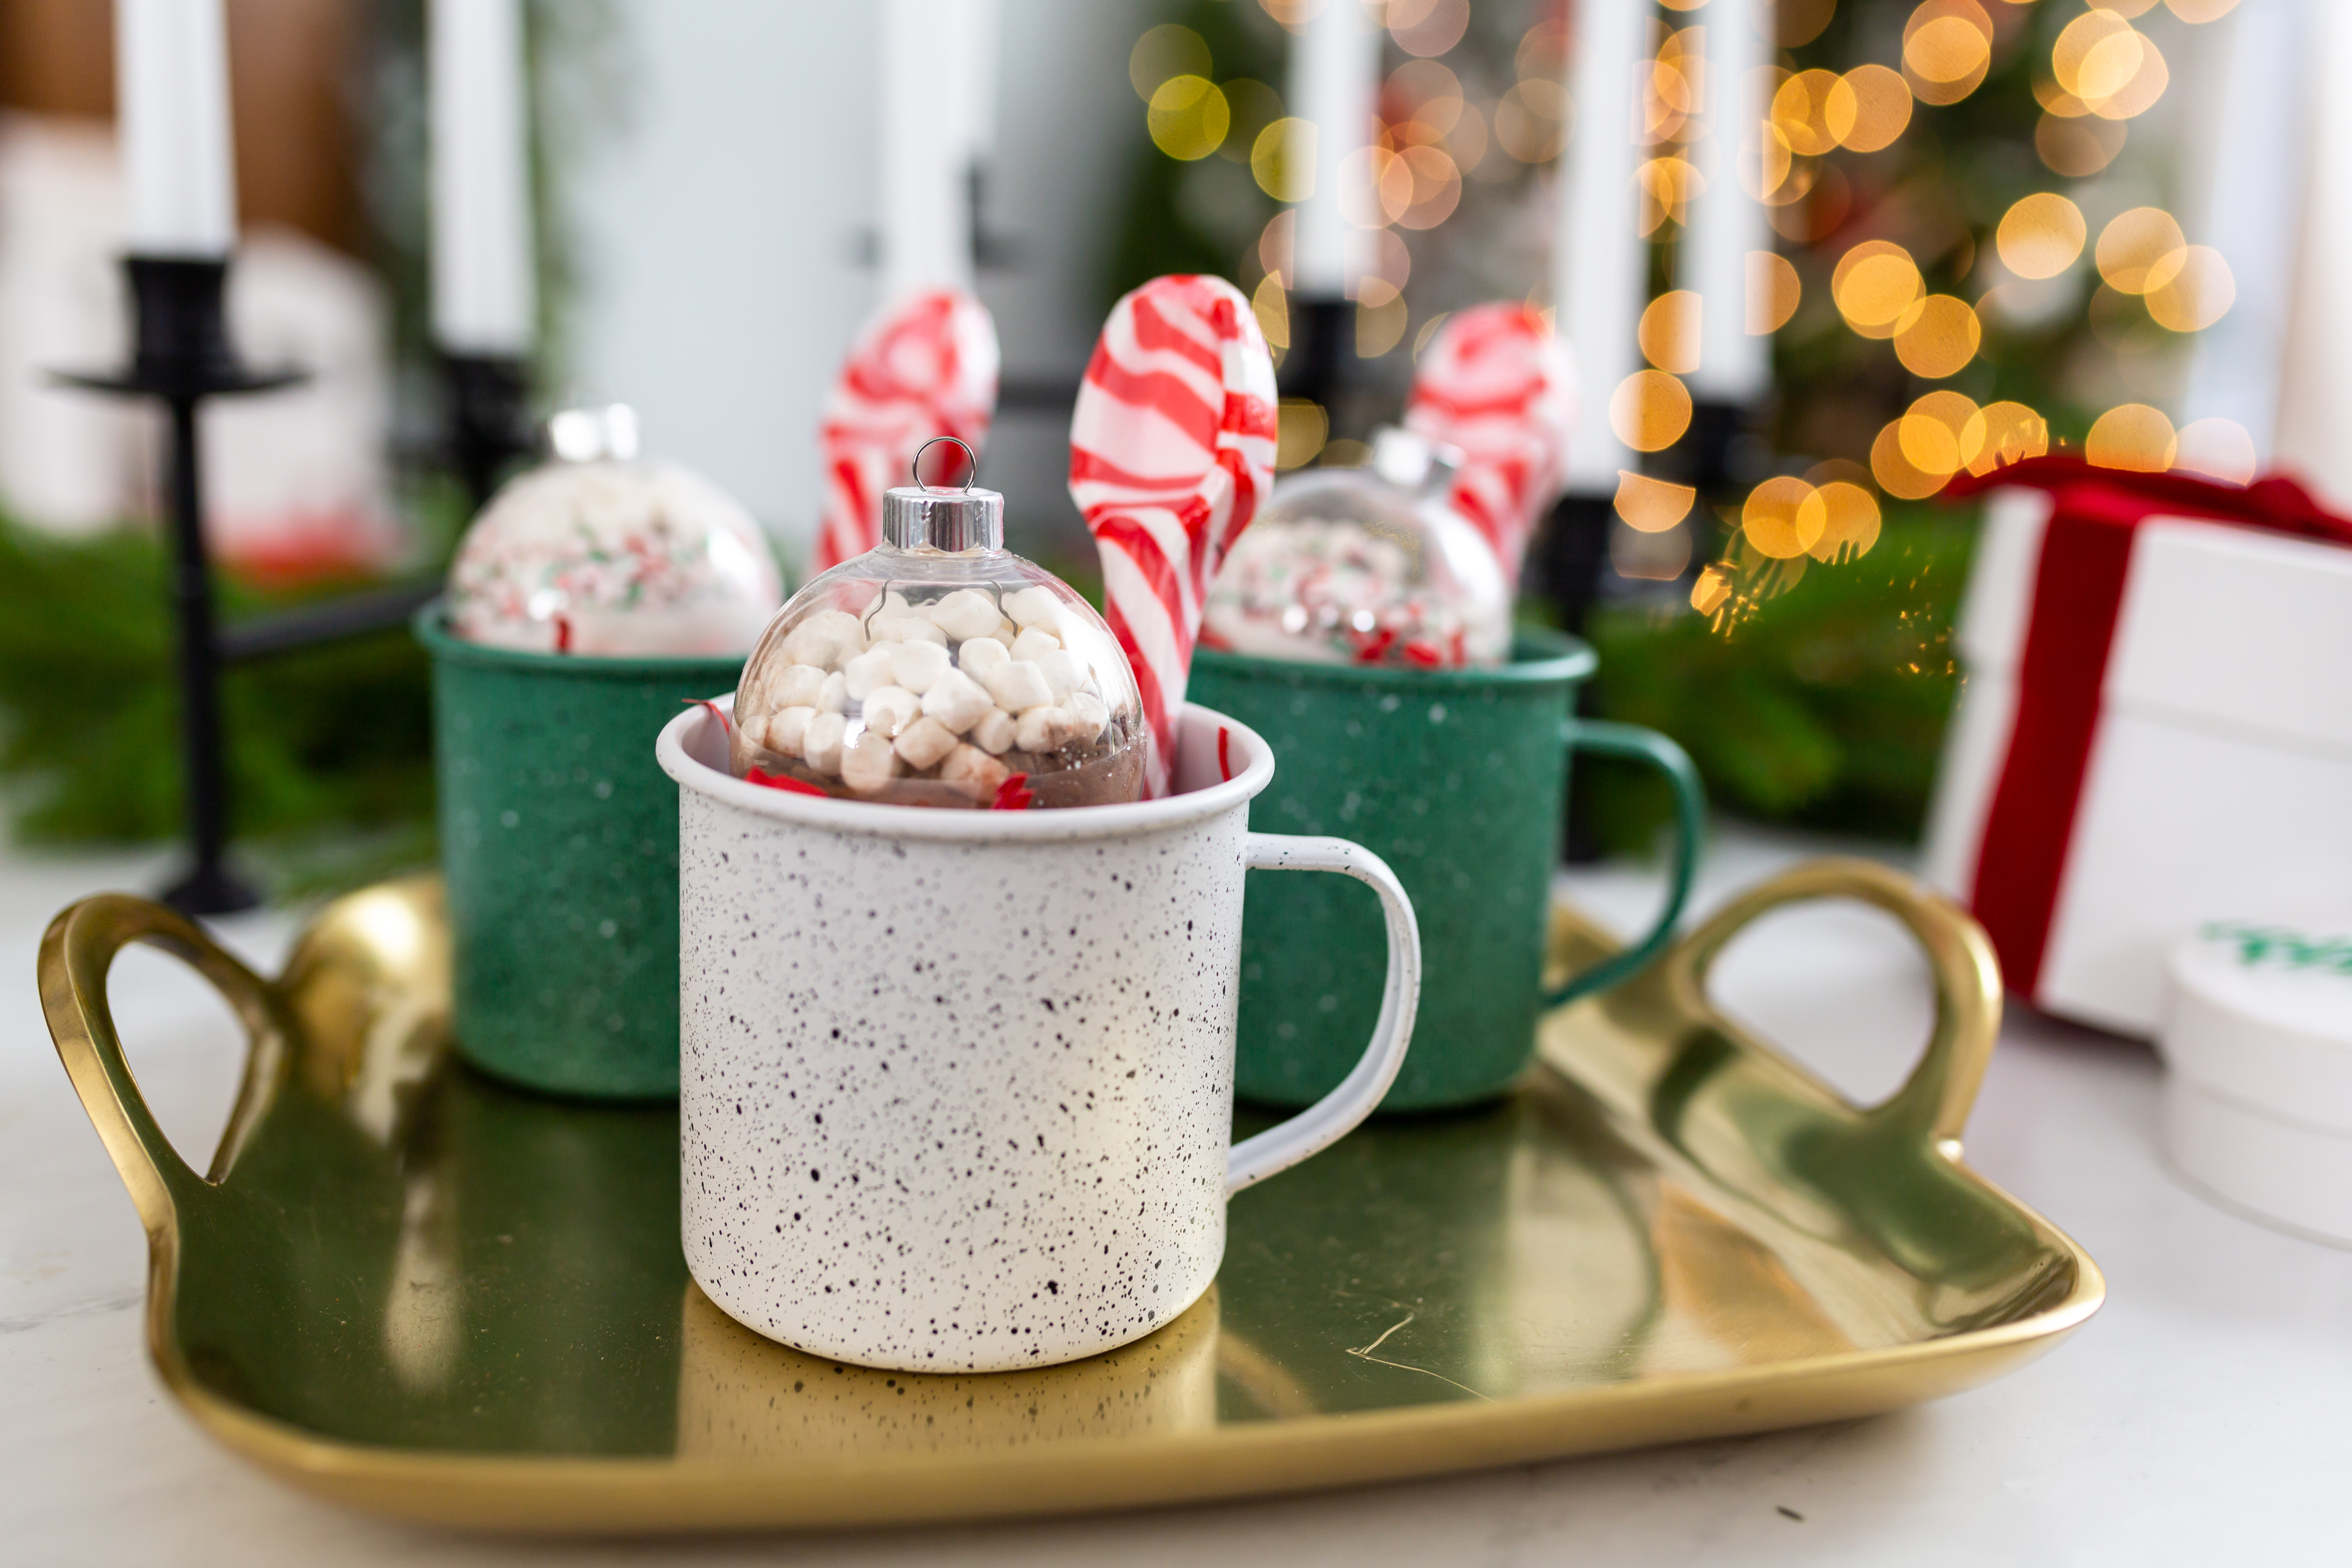 Christmas Ceramic Coffee Mug All Booked For Christmas Coffee Mug Christmas Coffee Mug Gift Christmas Cocoa Mug Gift Holiday Coffee Mug